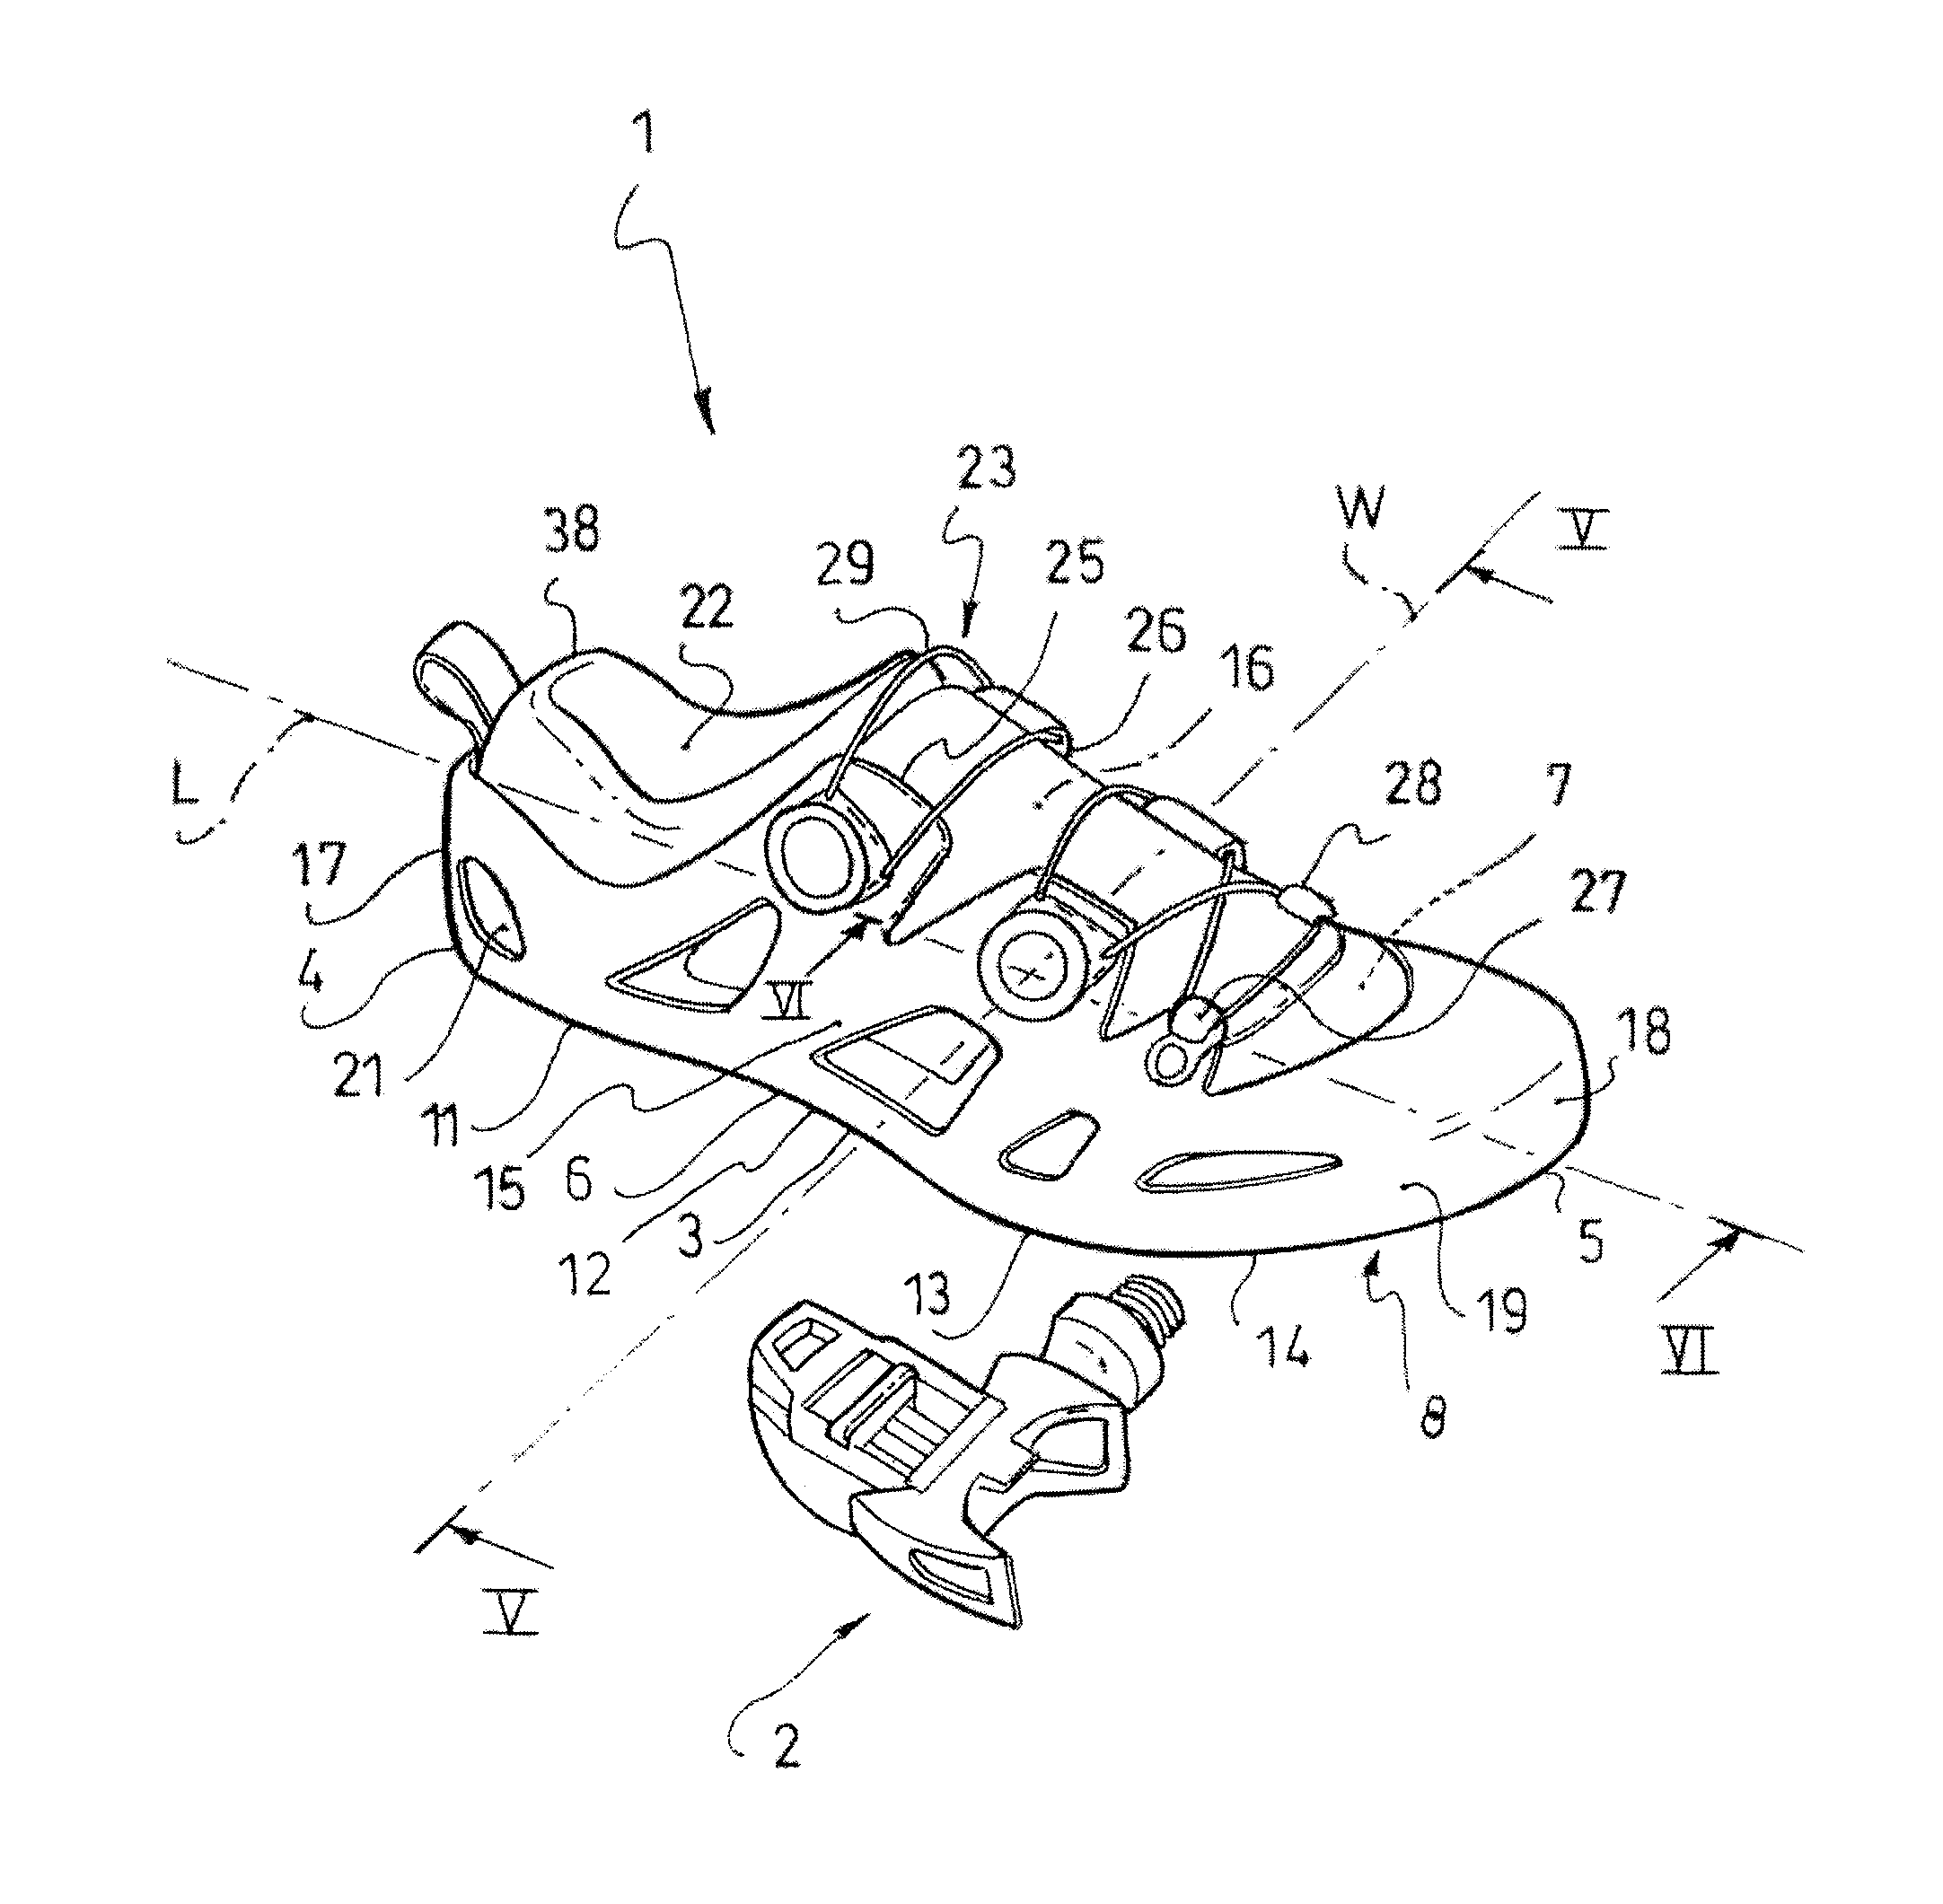 Sports shoe